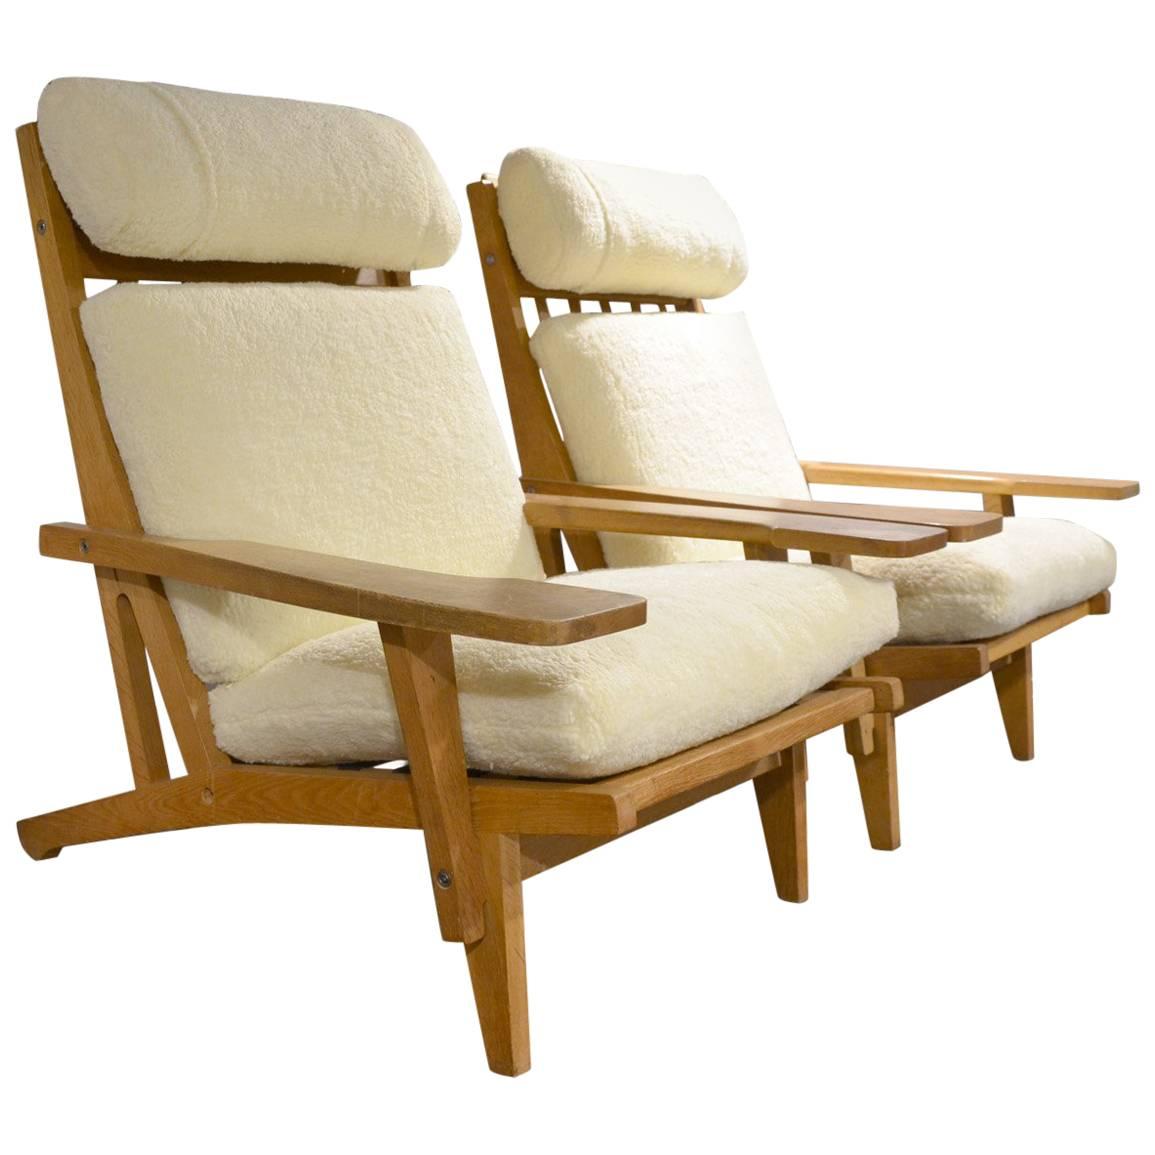 Beautiful Pair of Danish Modern Lounge Chairs Hans Wegner for GETAMA